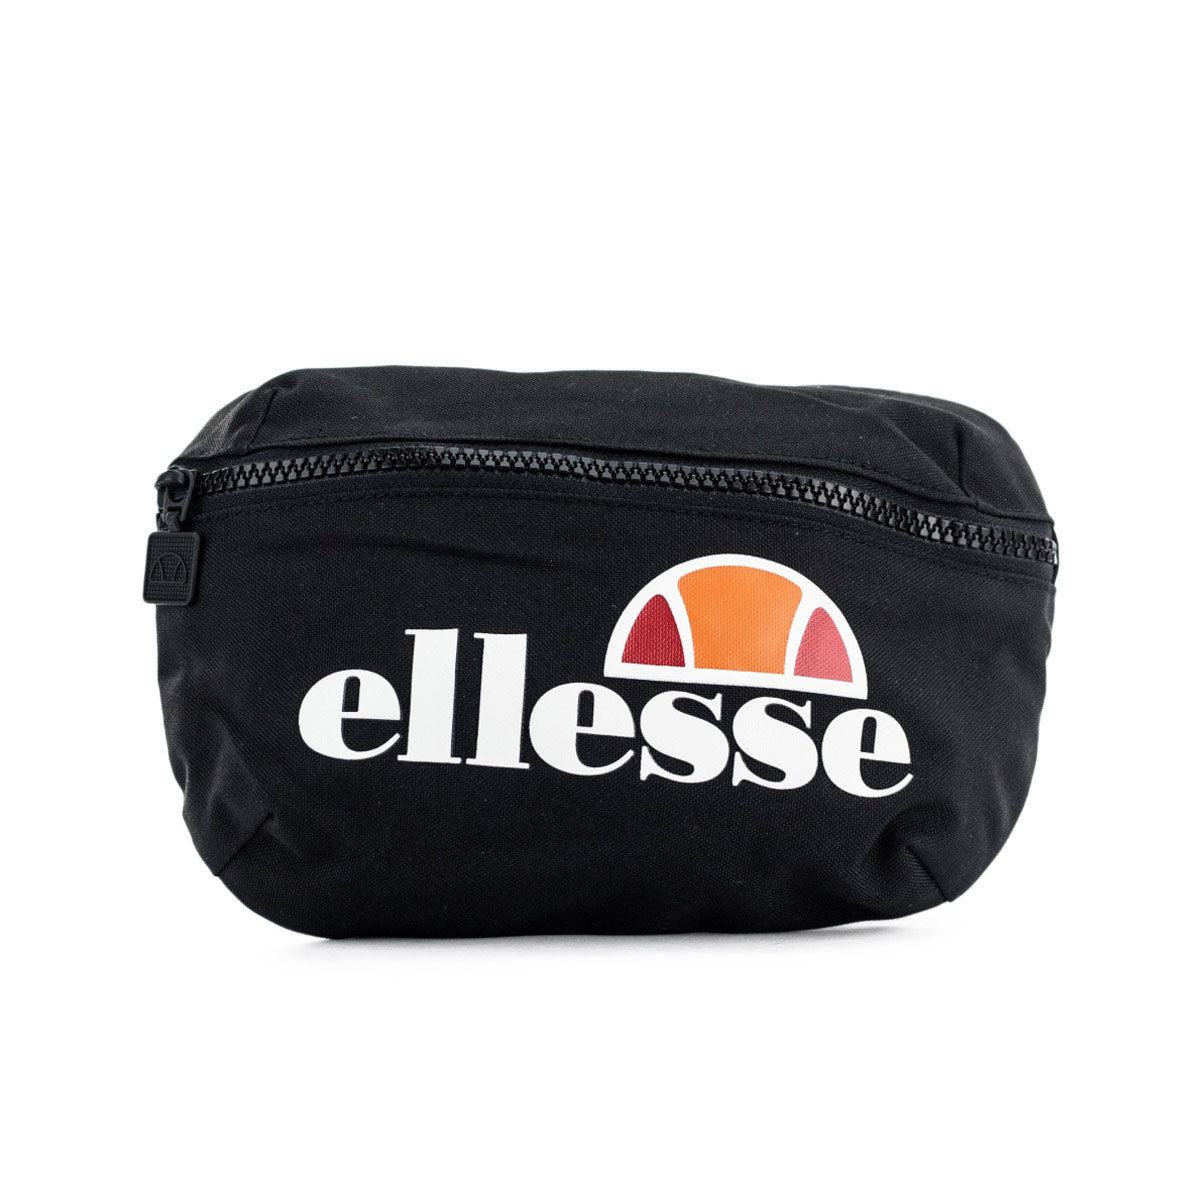 Ellesse Rosca Cross Body Bag Tasche SAAY0593black - schwarz